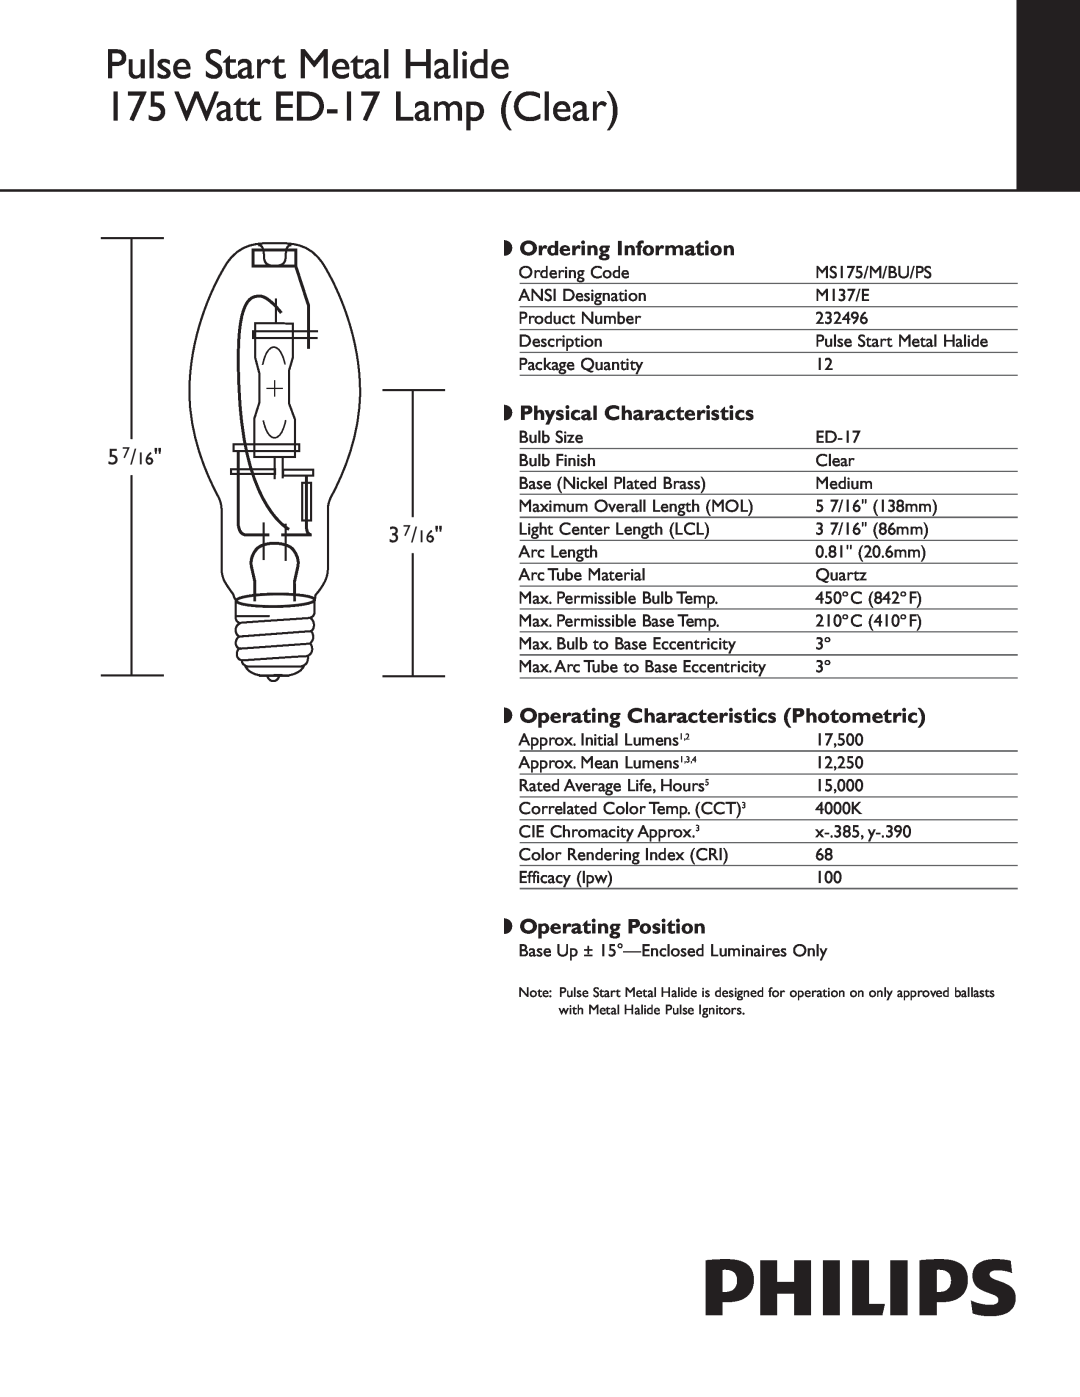 Philips 232496 manual Pulse Start Metal Halide 175 Watt ED-17Lamp Clear, 5 7/16, 3 7/16, Ordering Information 